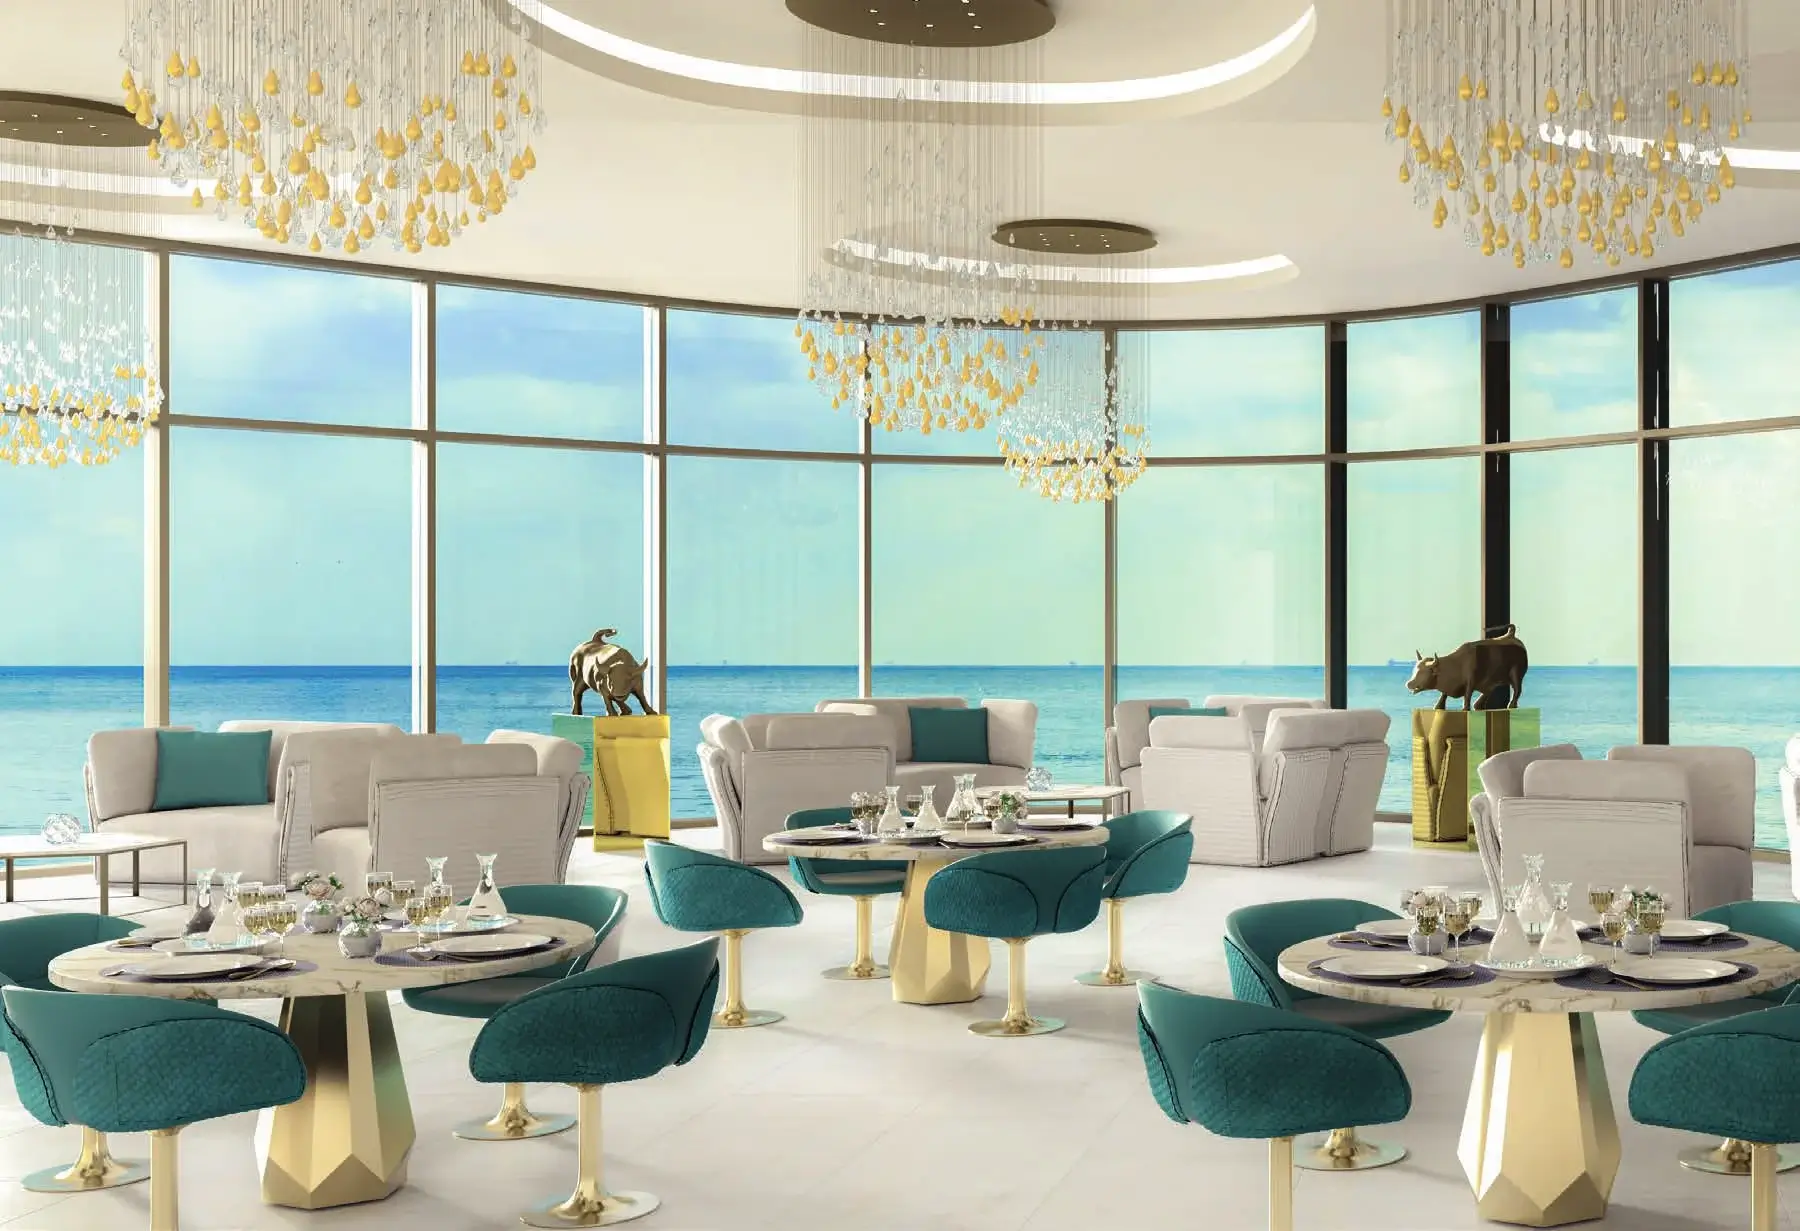 Oceanz by Danube Properties at Dubai Maritime City